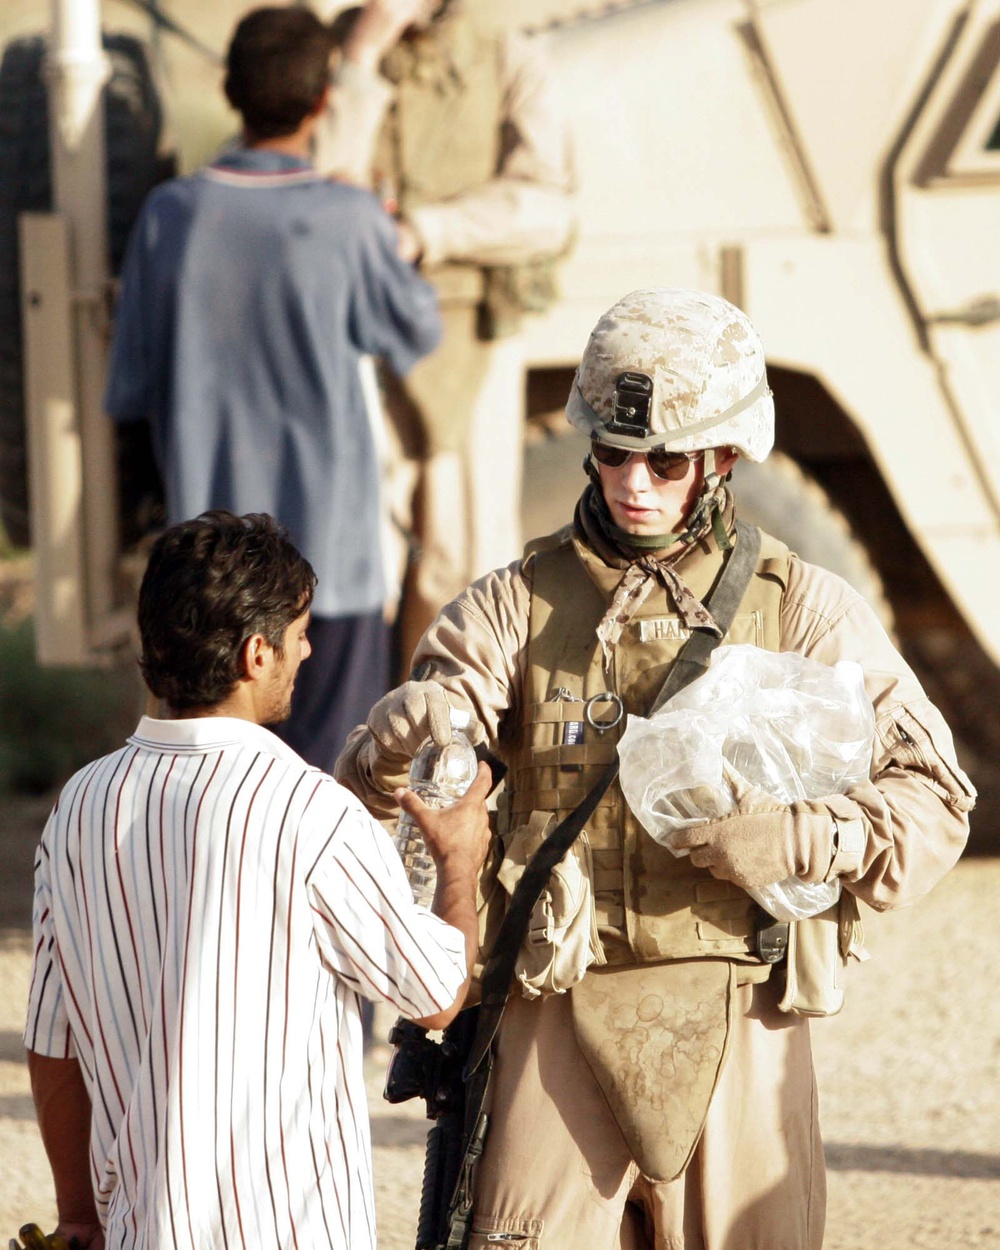 Marines at Camp Taqaddum Interact With Surrounding Community